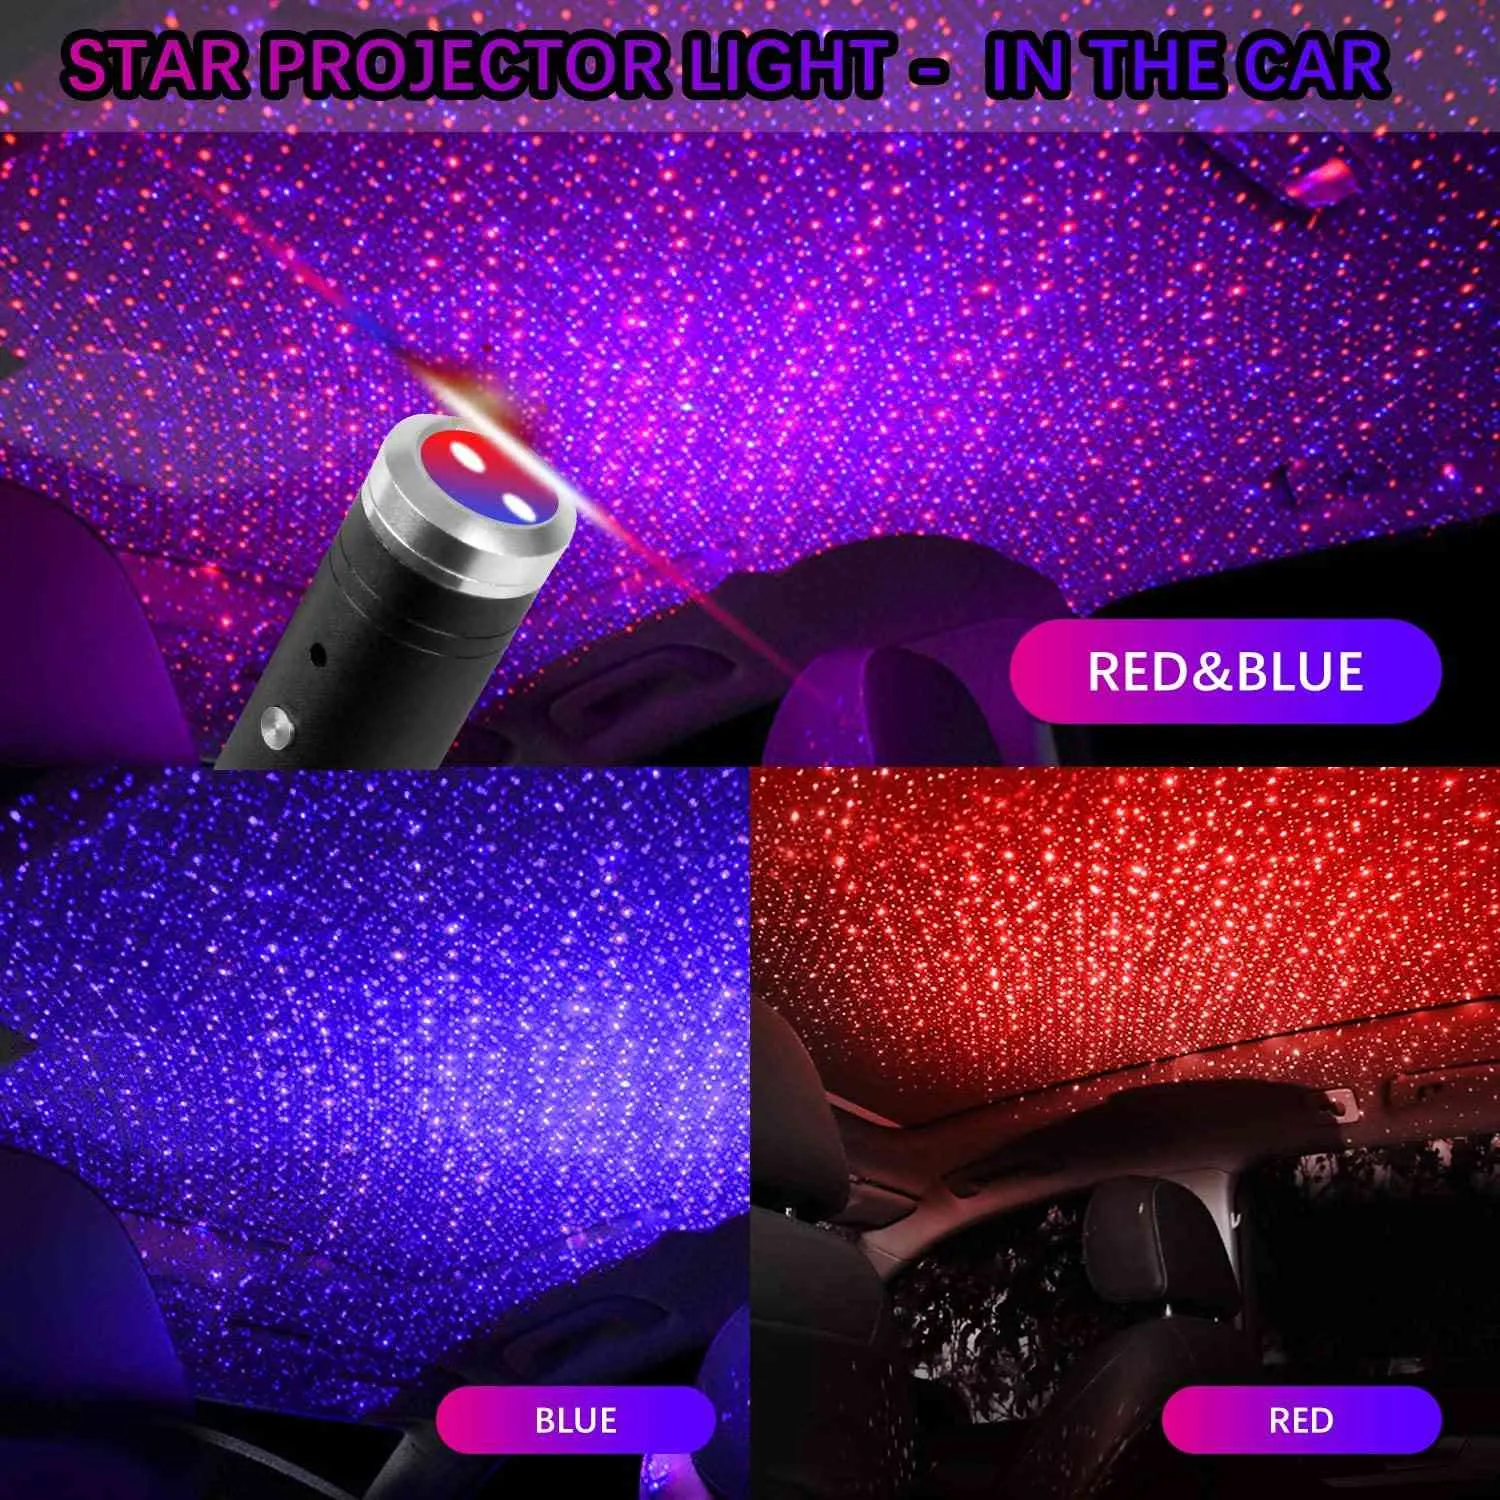 USB Autodach Atmosphäre Sternenhimmel Lampe, LED Auto Decke